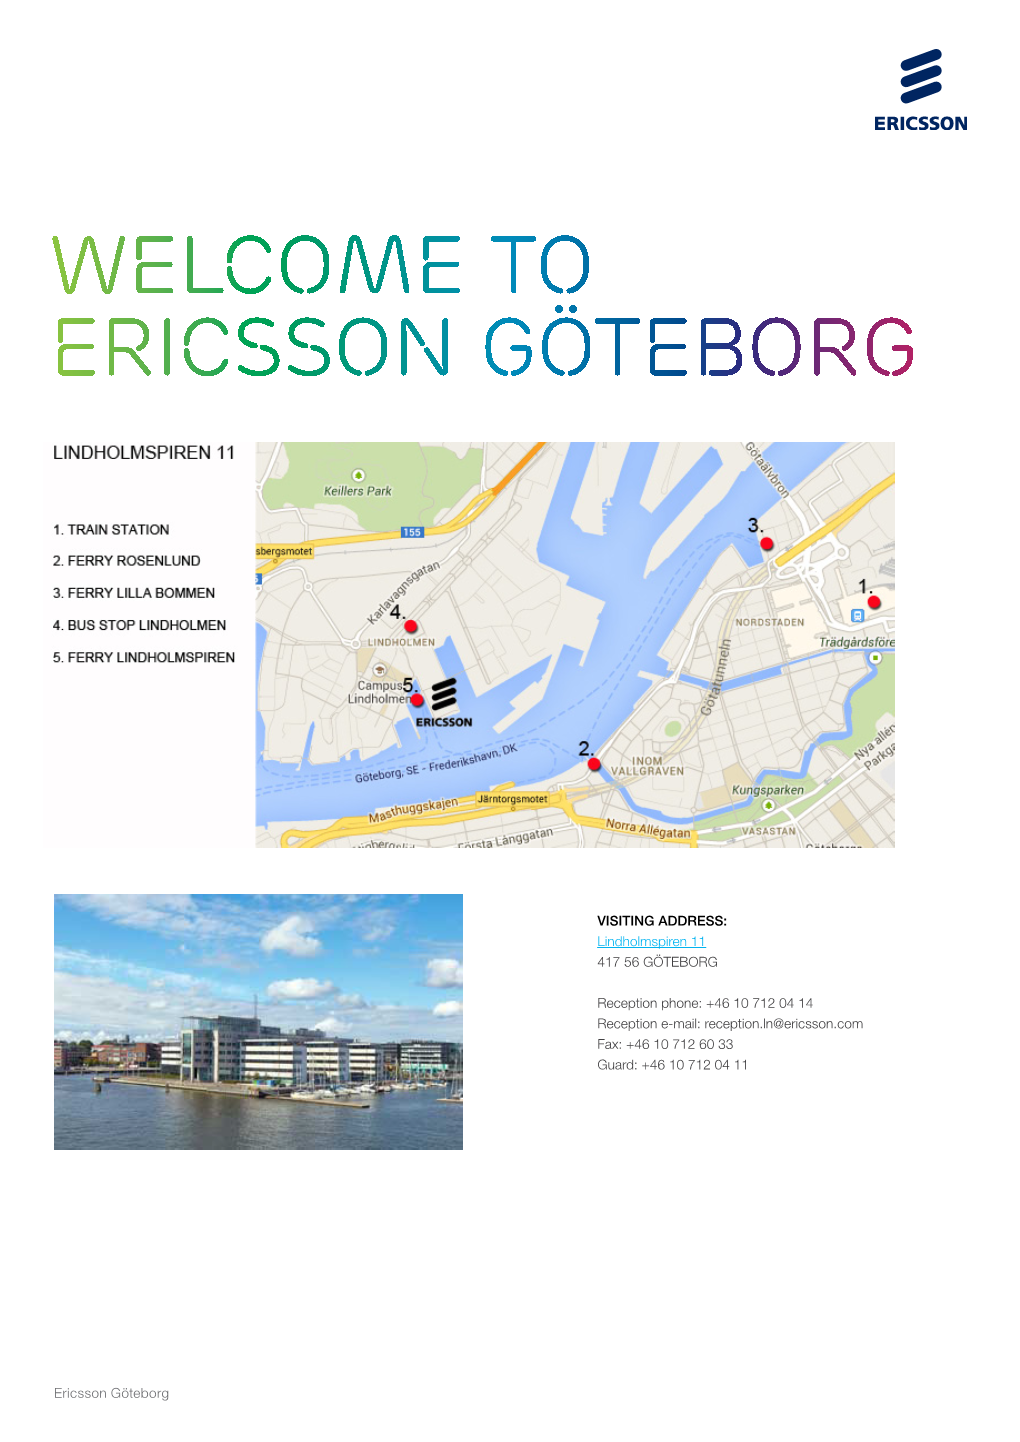 Ericsson Göteborg